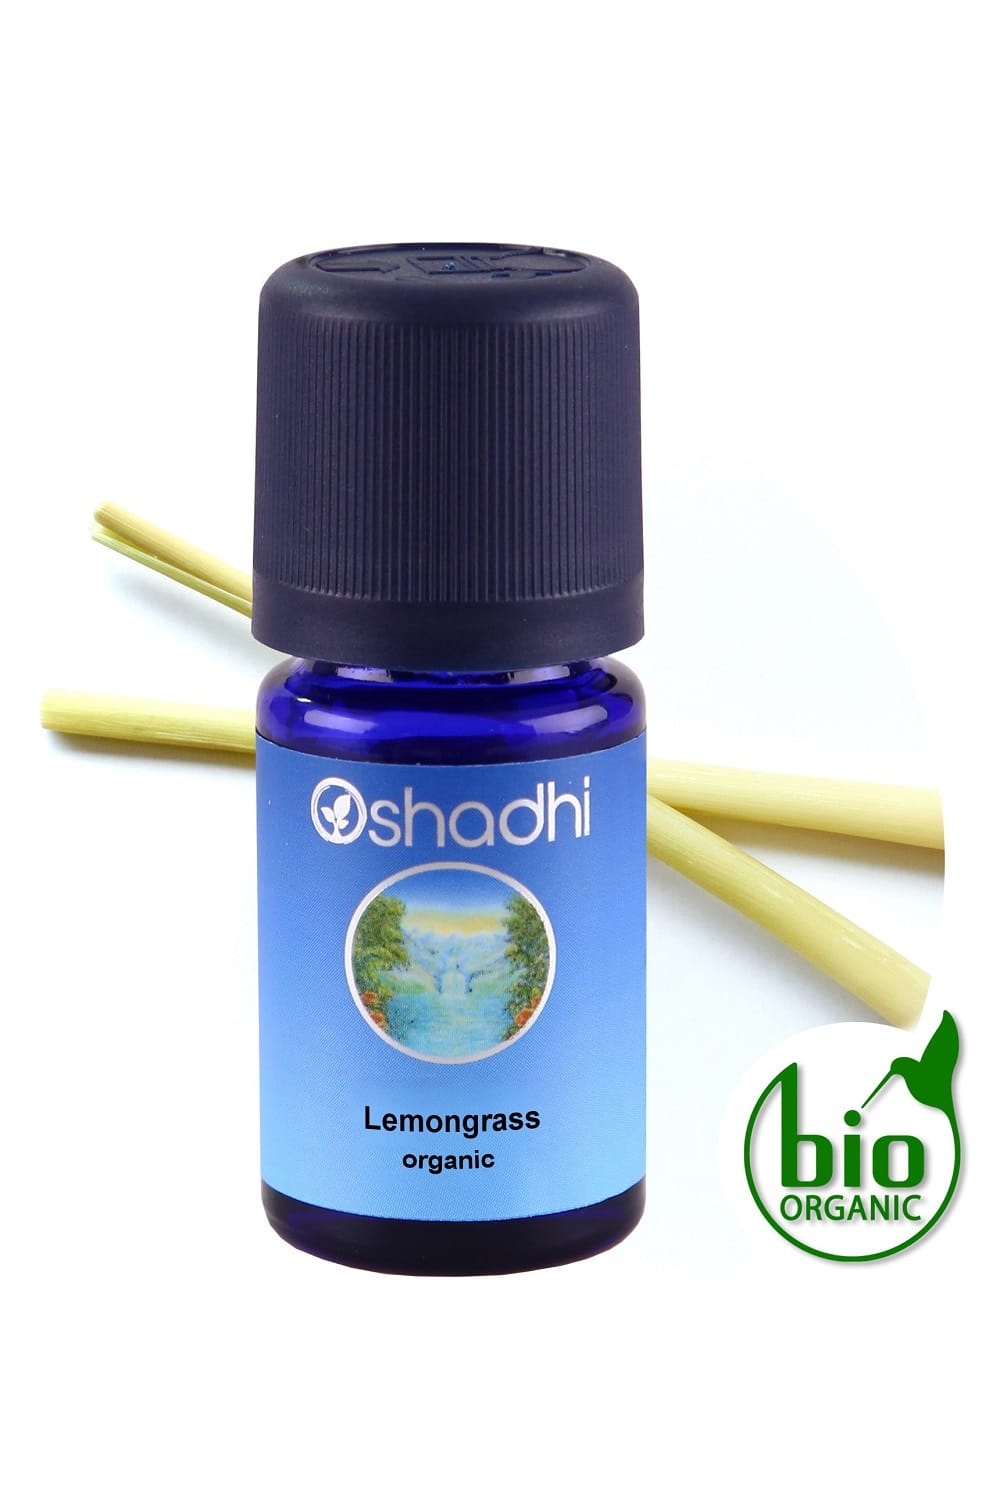 Lemongrass20organic-1.jpg